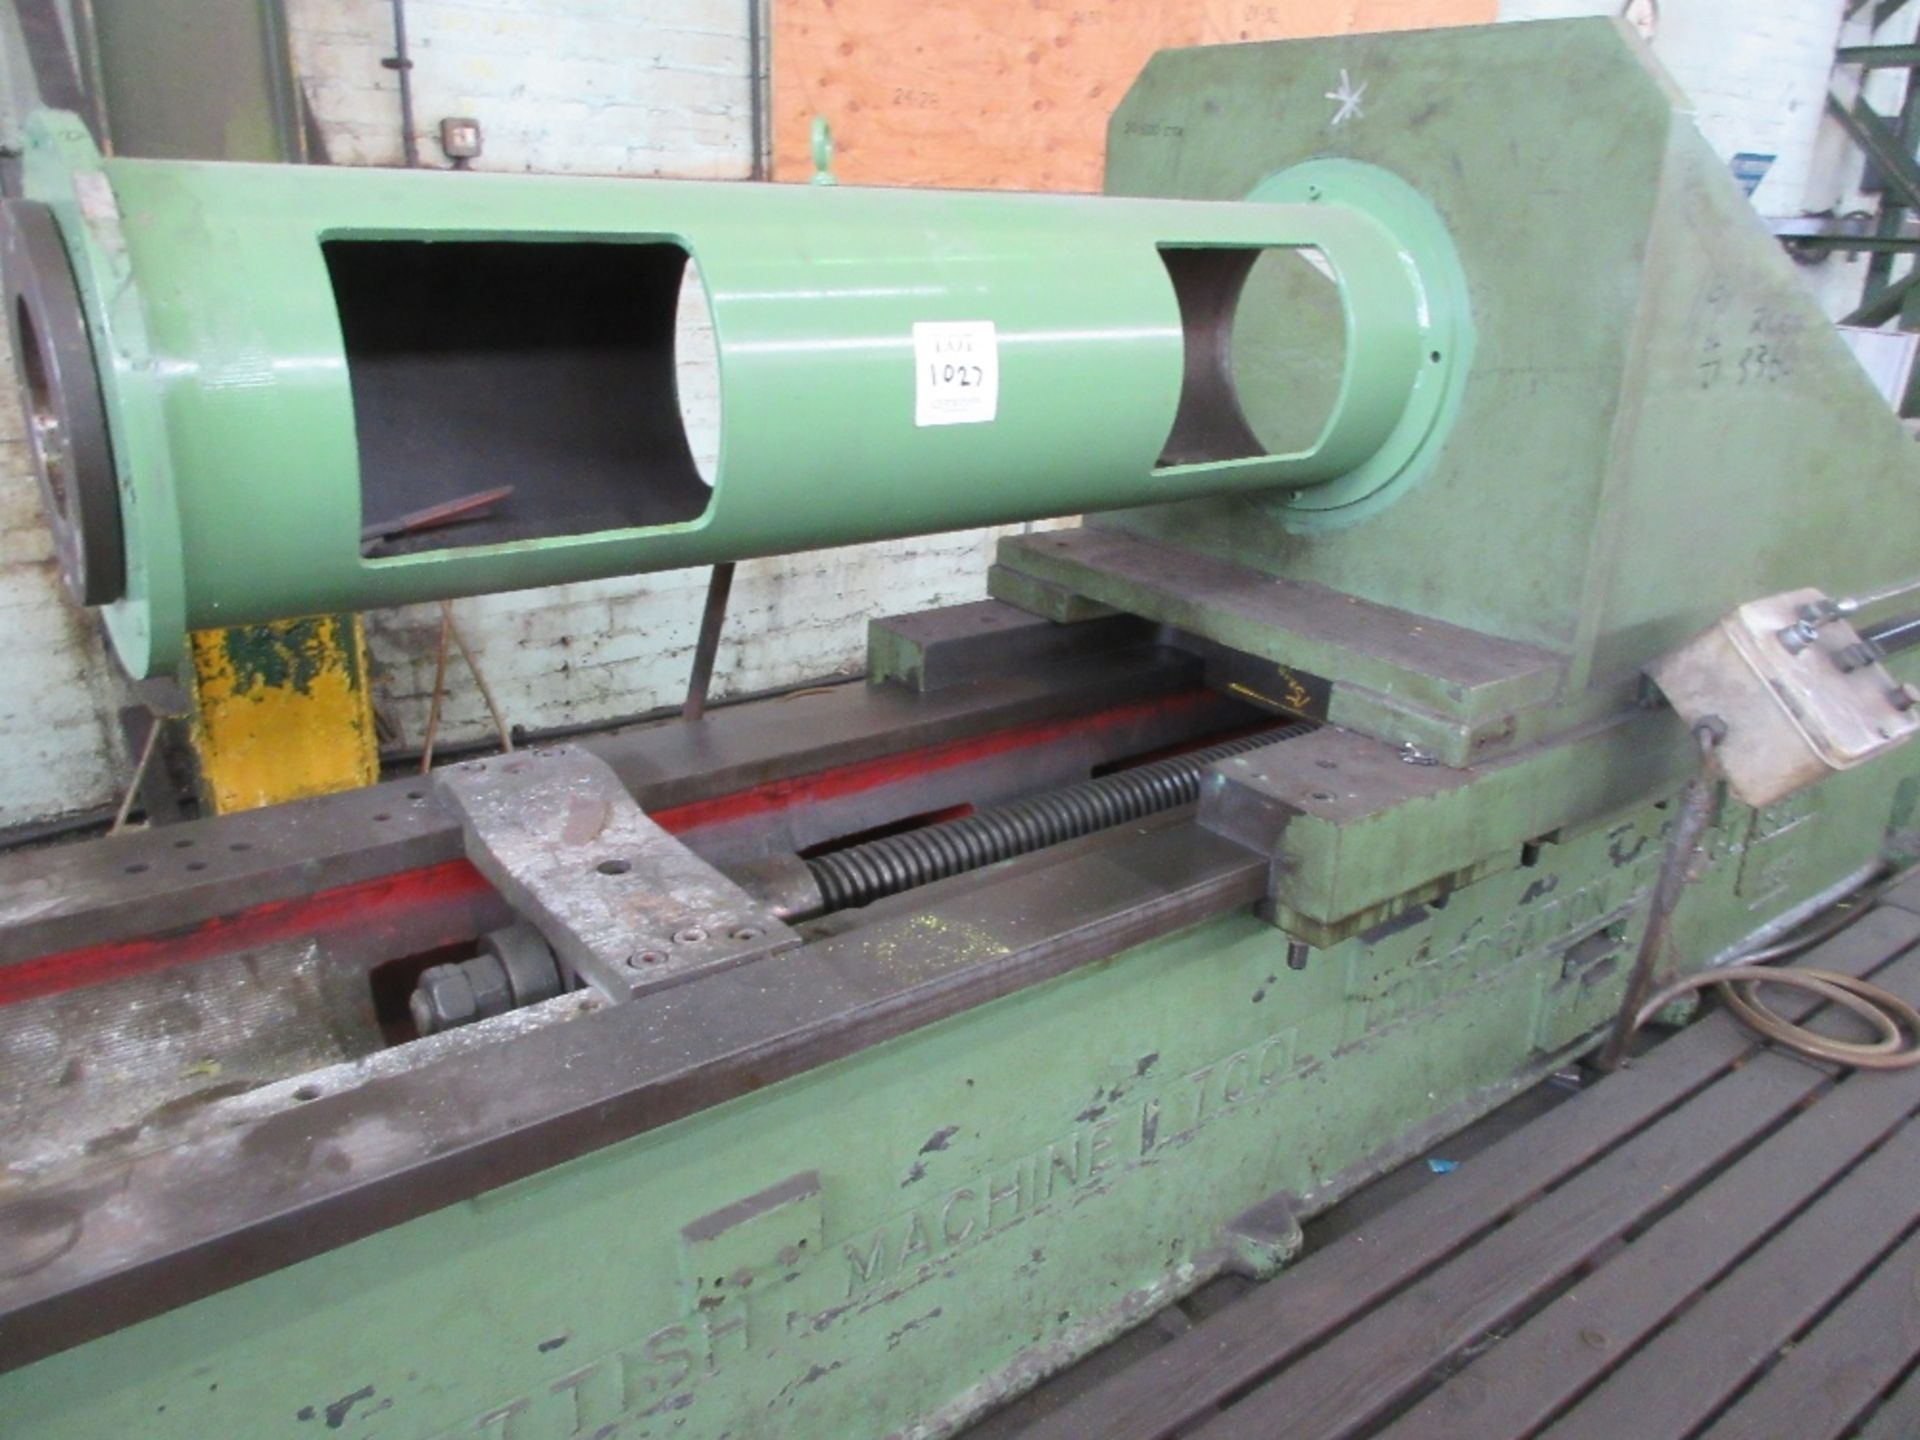 Scottish horizontal press self fabricated mandrel sleeve press 21.5' Max. capacity (METHOD STATEMENT